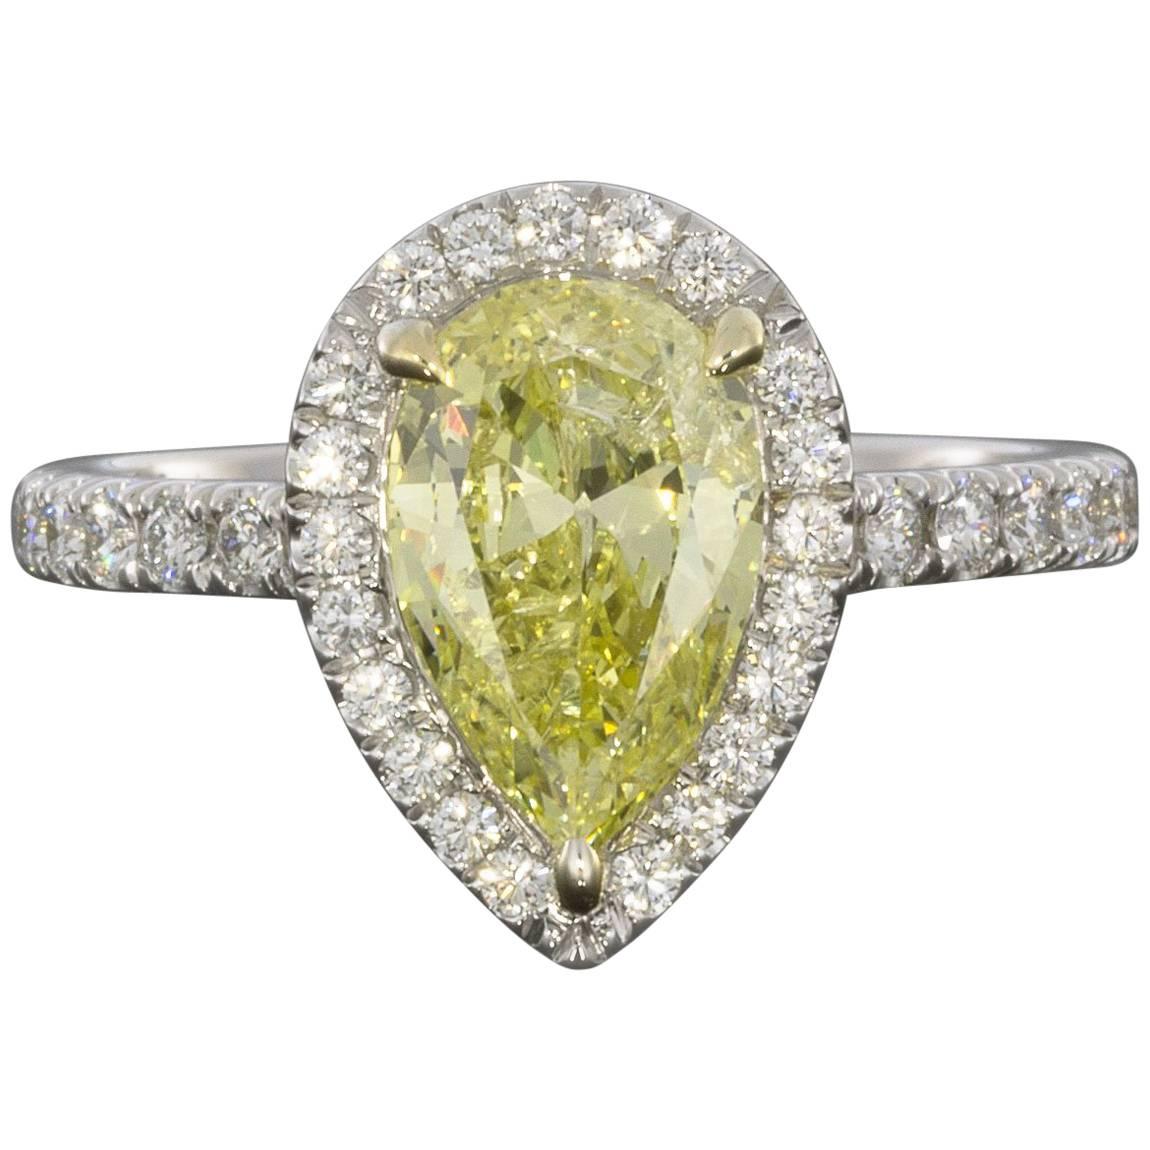 2.02 Carat Fancy Intense Yellow Pear Diamond Halo Engagement Ring